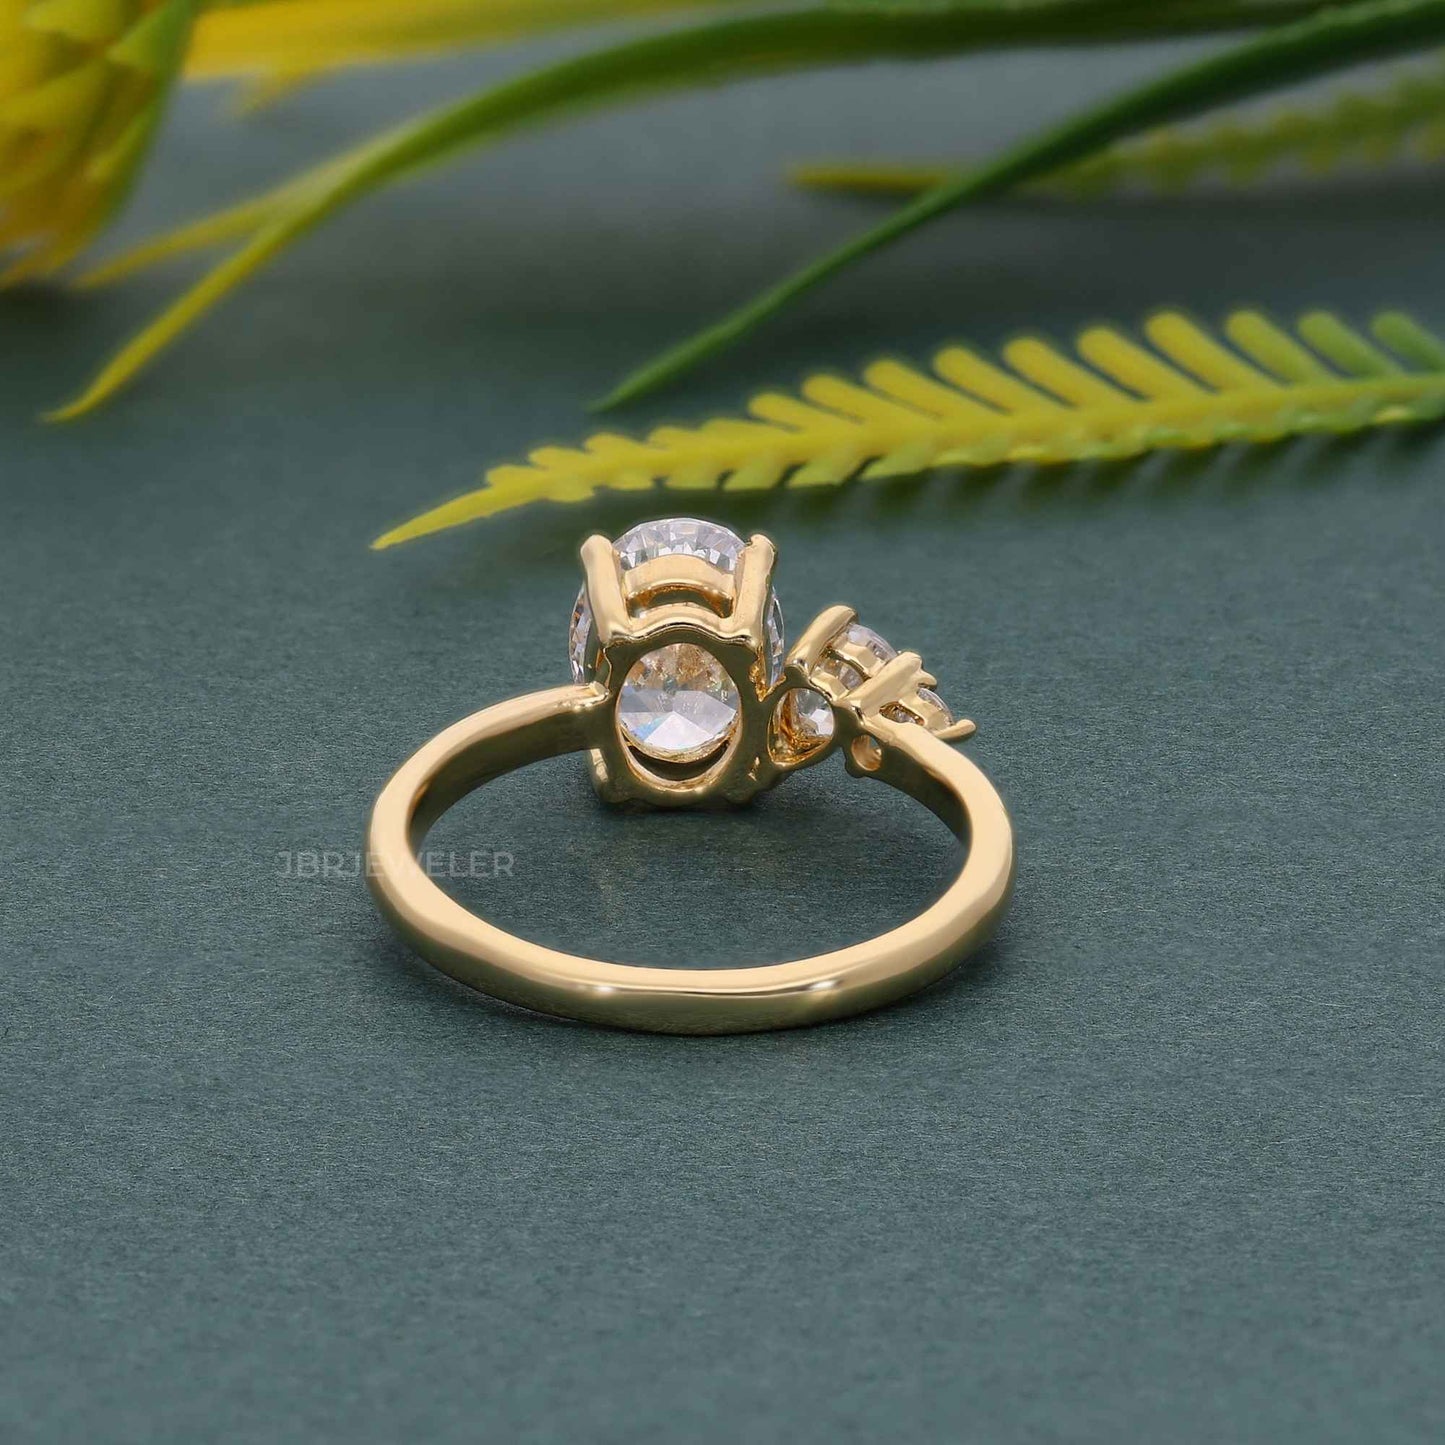 Asymmetrical Unique Oval Moissanite Diamond Engagement Ring